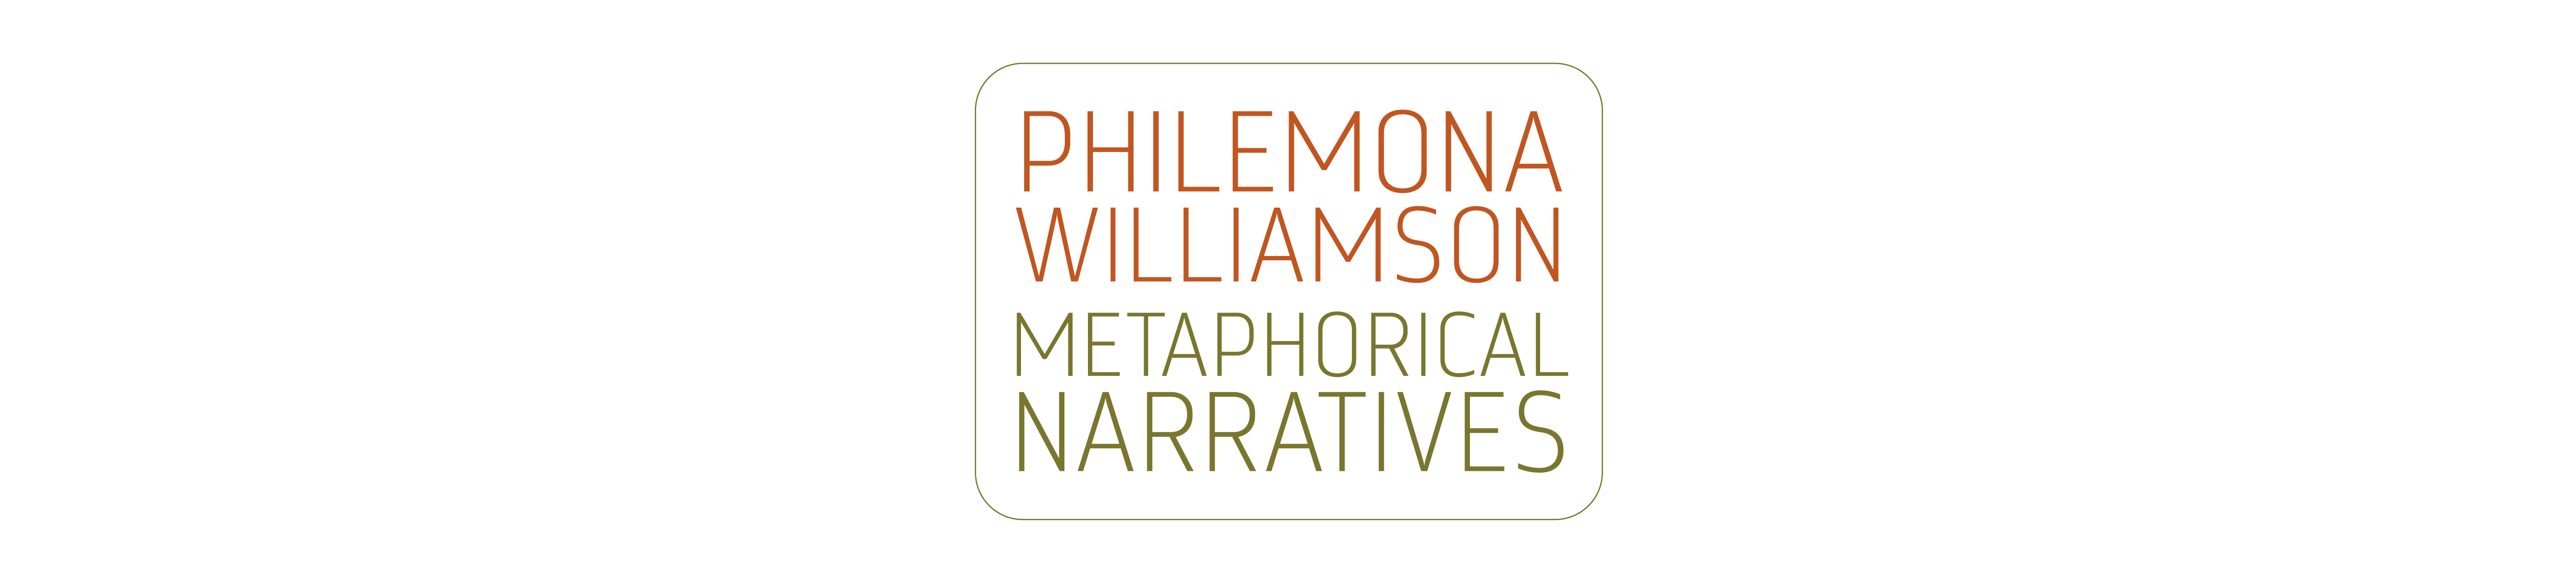 I'm an image! A logotype design for "Philemona Williamson: Metaphorical Narratives" on a white background.